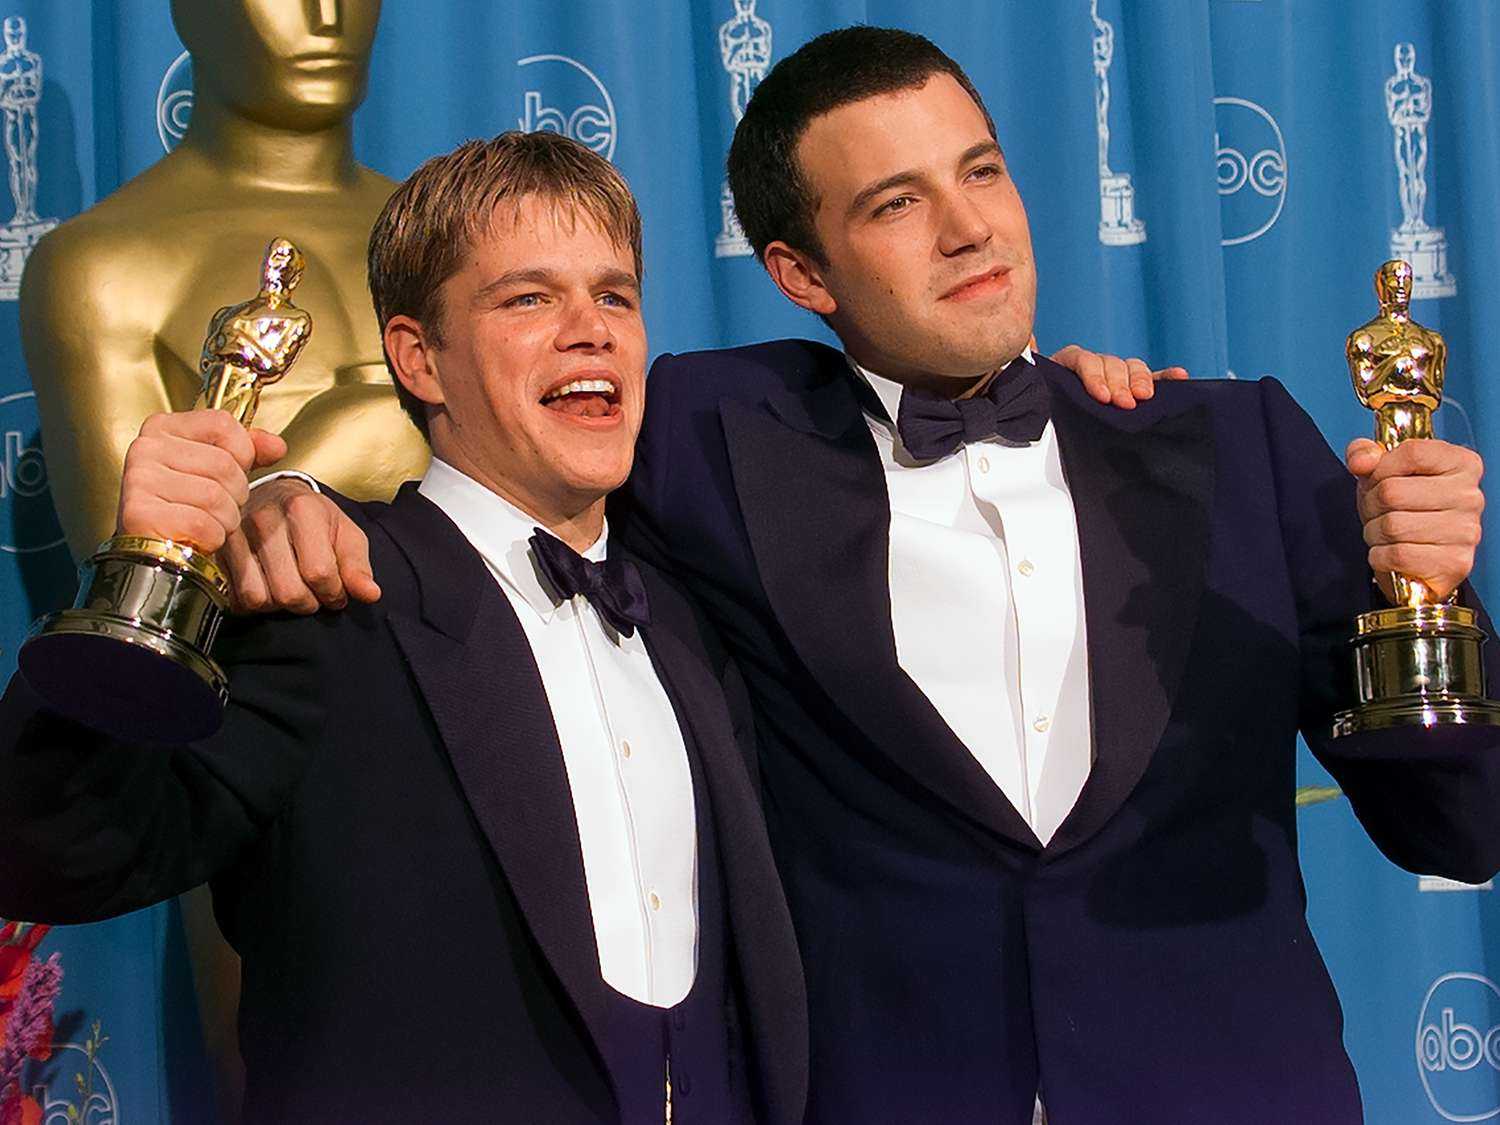 Matt Damon and Ben Affleck (Source: People)